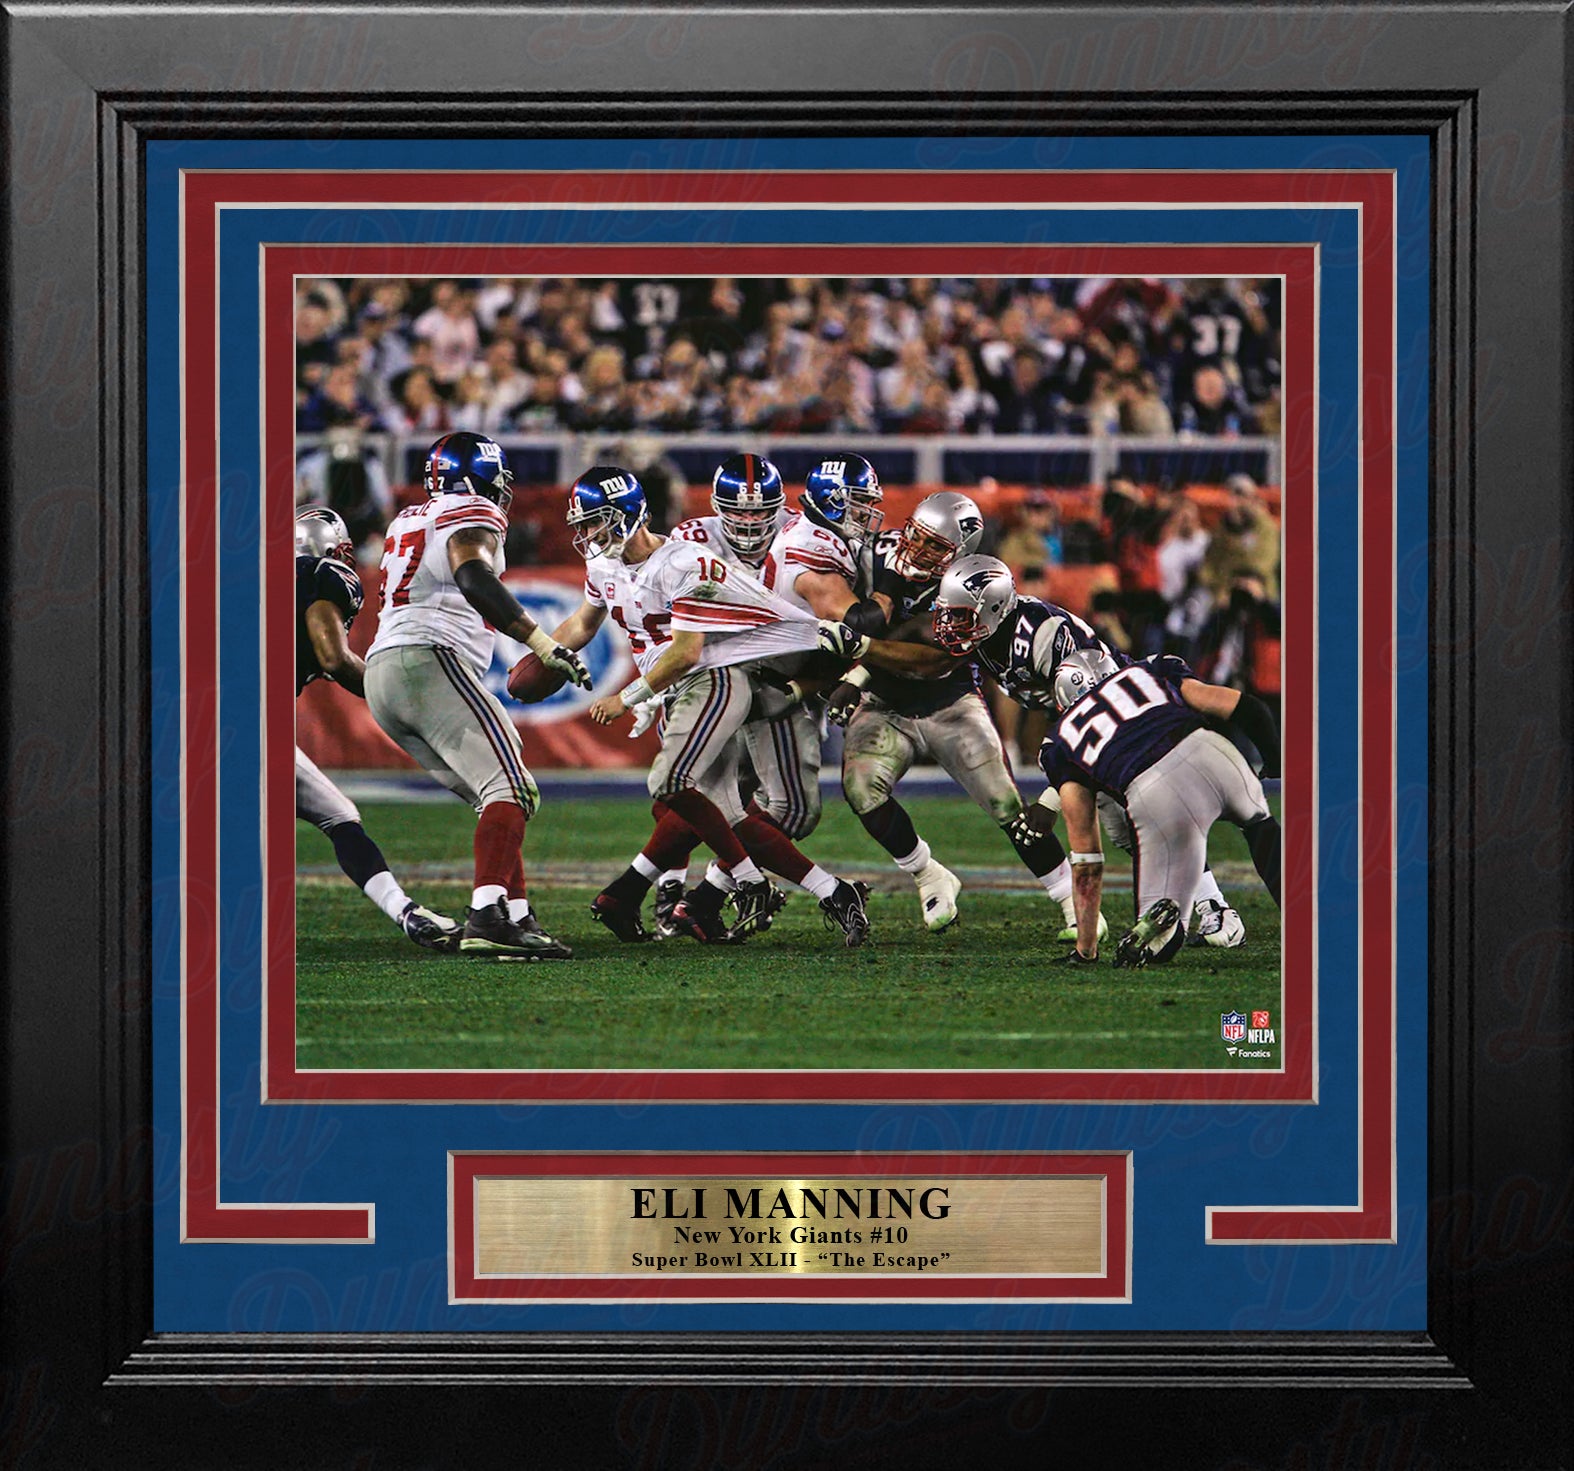 Eli Manning Super Bowl XLII Escape New York Giants 8" x 10" Framed Football Photo - Dynasty Sports & Framing 